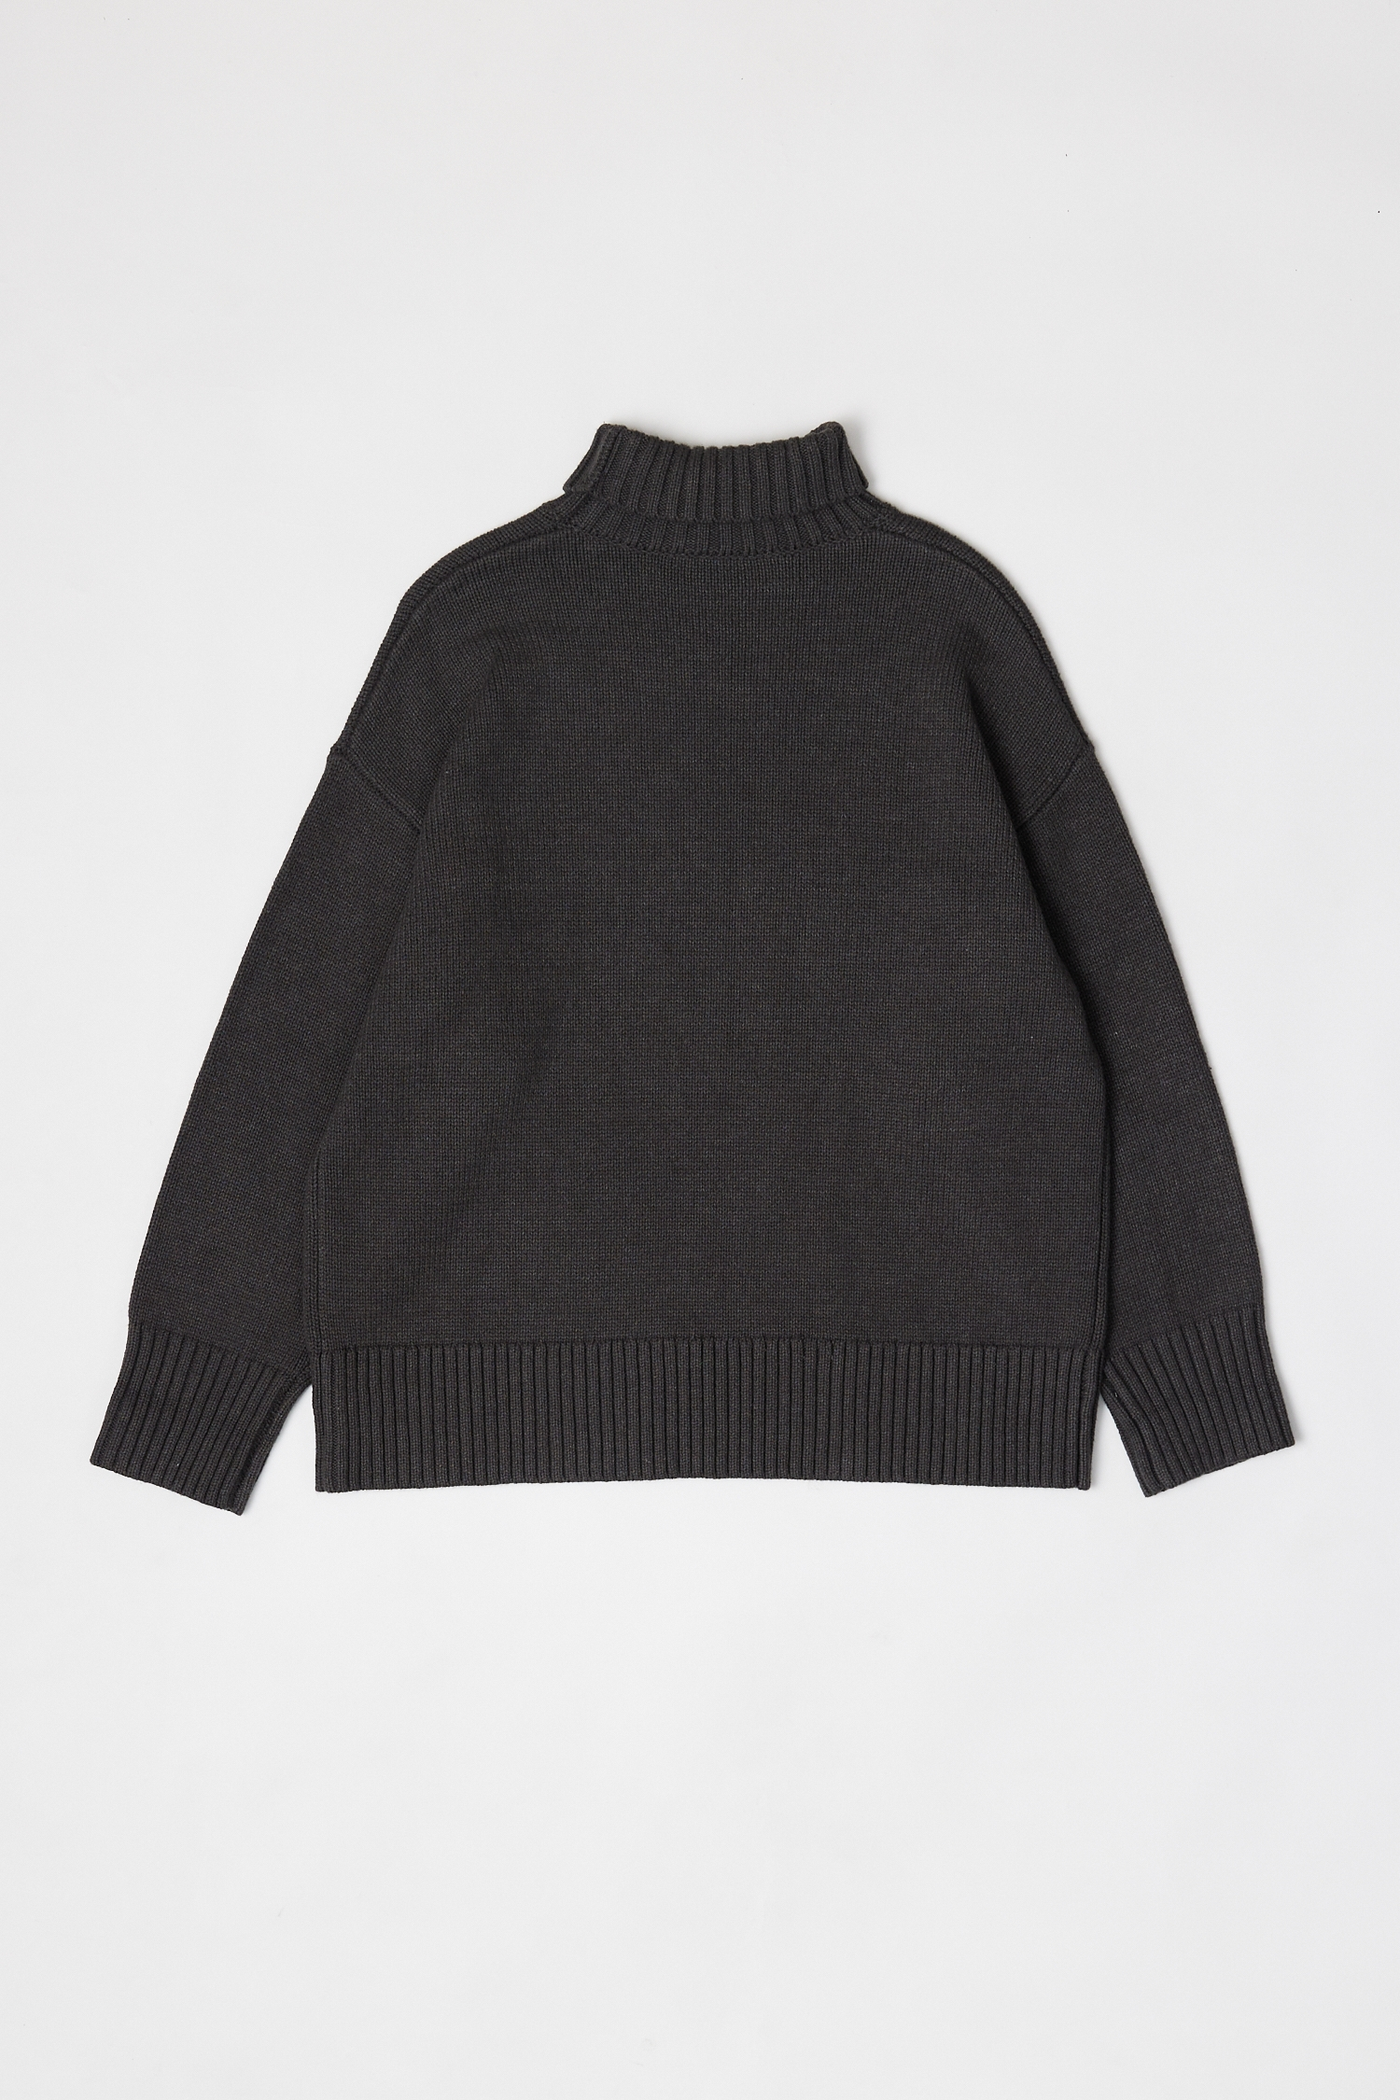 The Phoebe Sweater